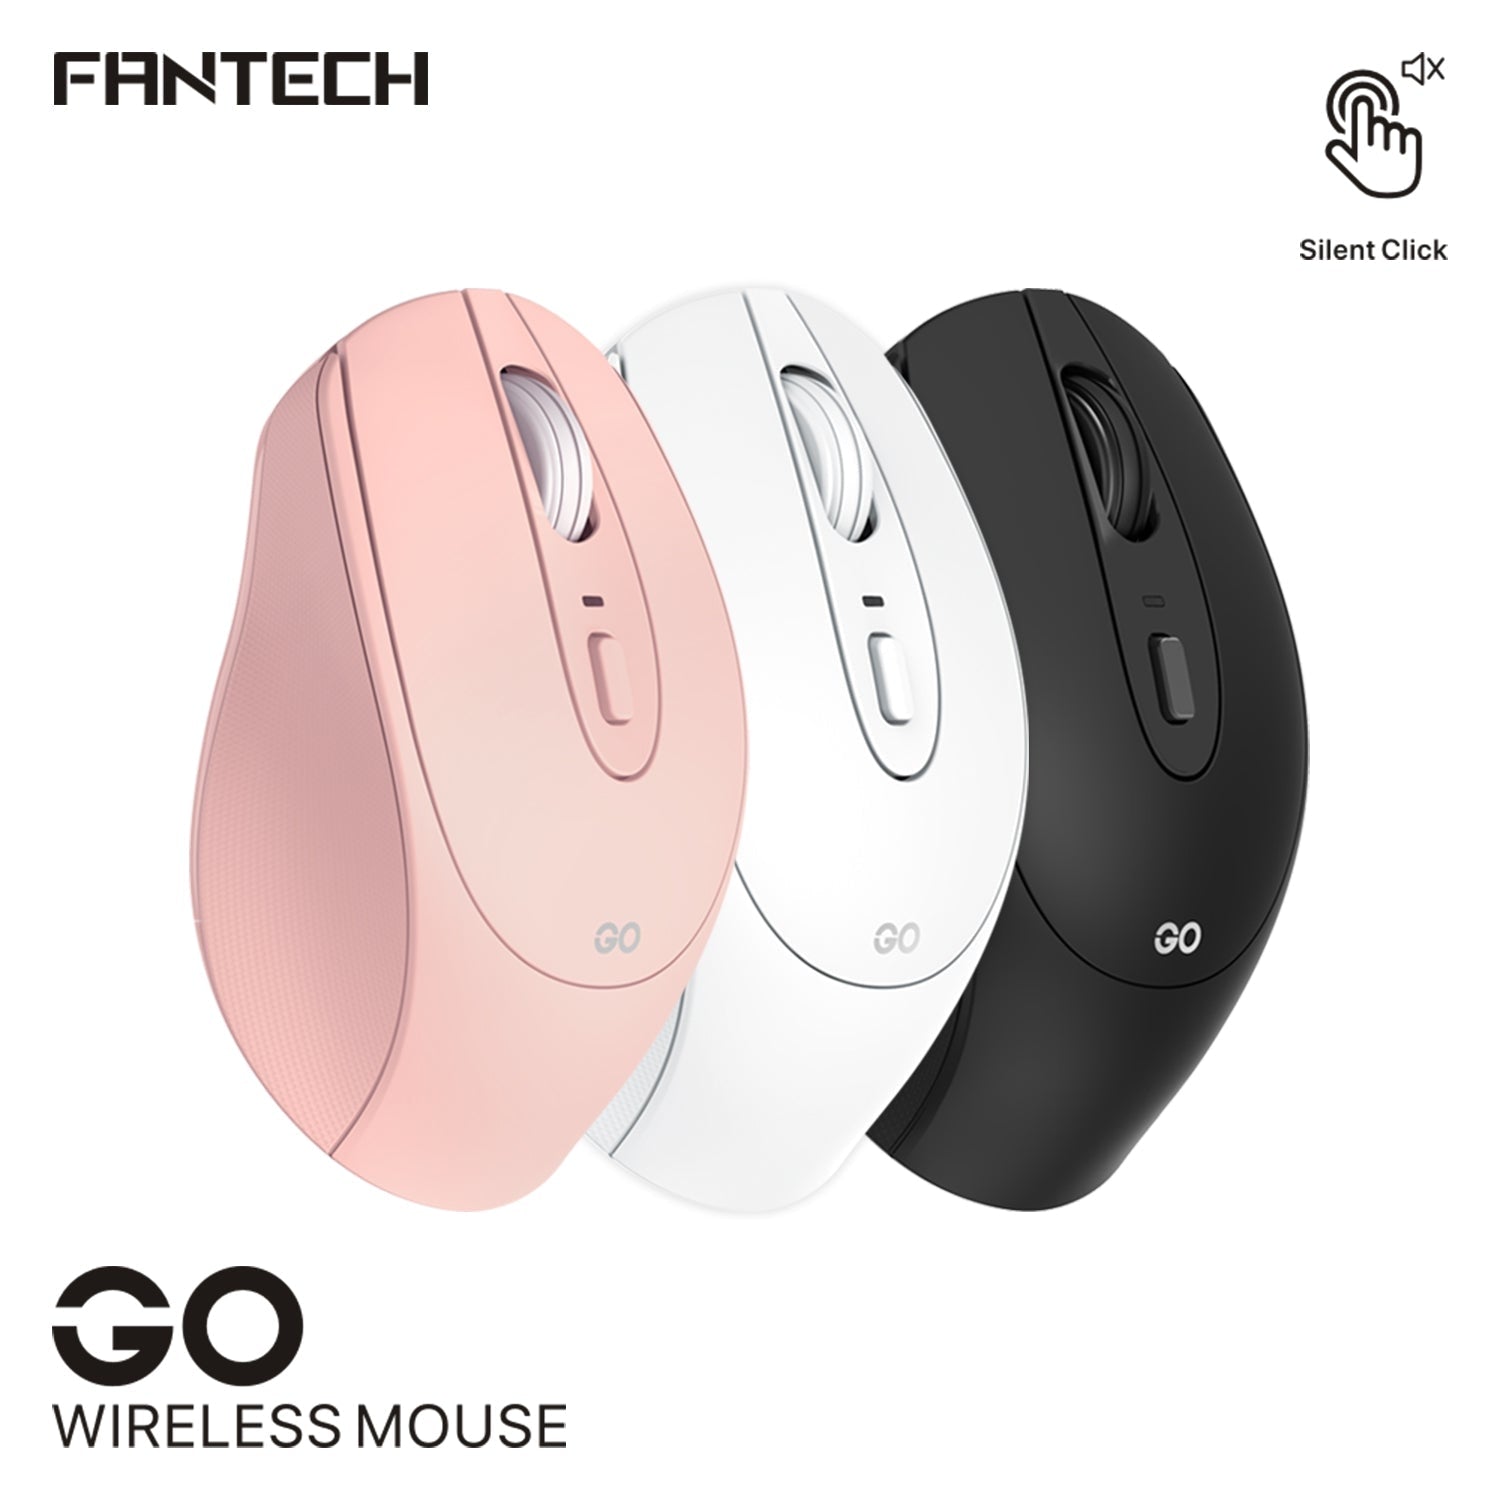 Fantech W191 Wireless Mouse with Silent Click Fantech 8 JOD